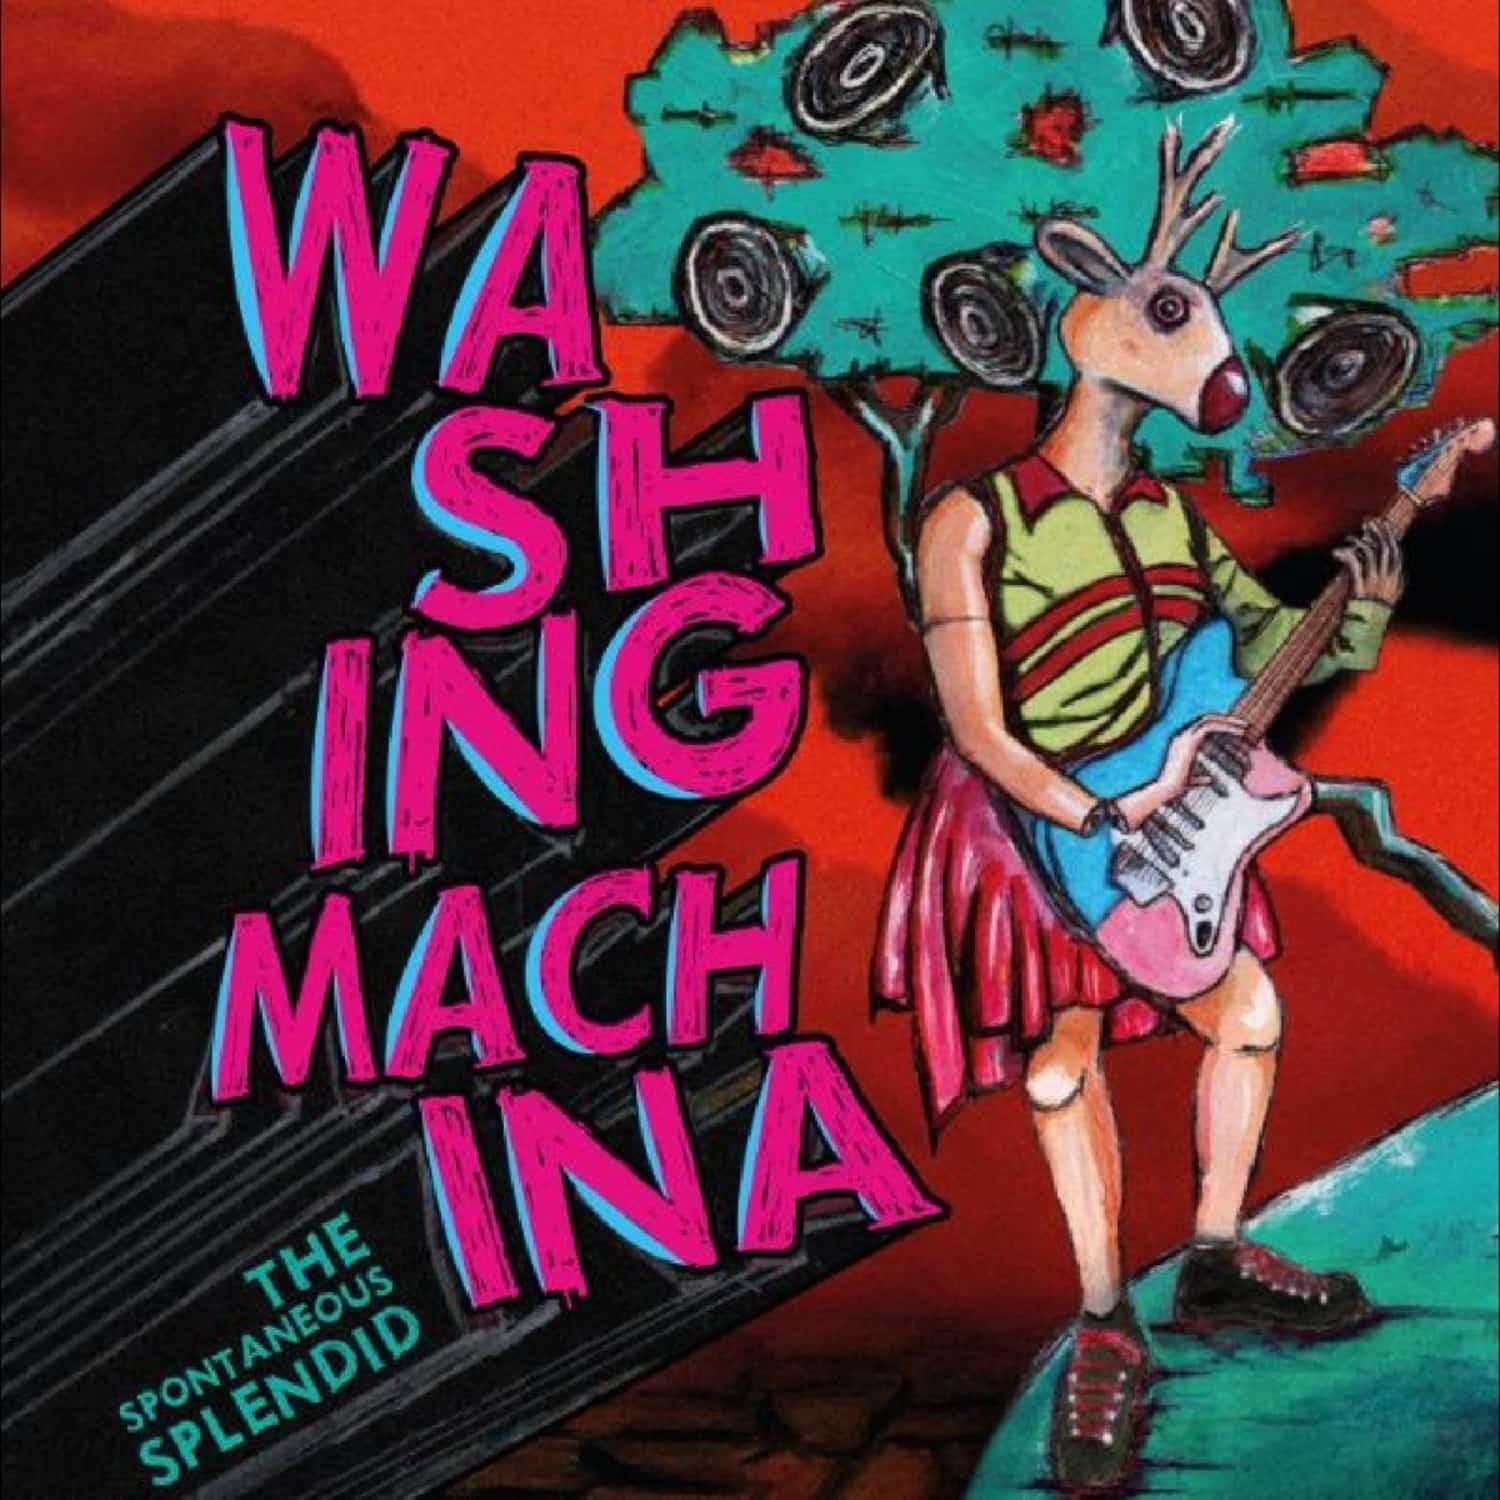 Washing Machina - THE SPONTANEOUS SPLENDID 